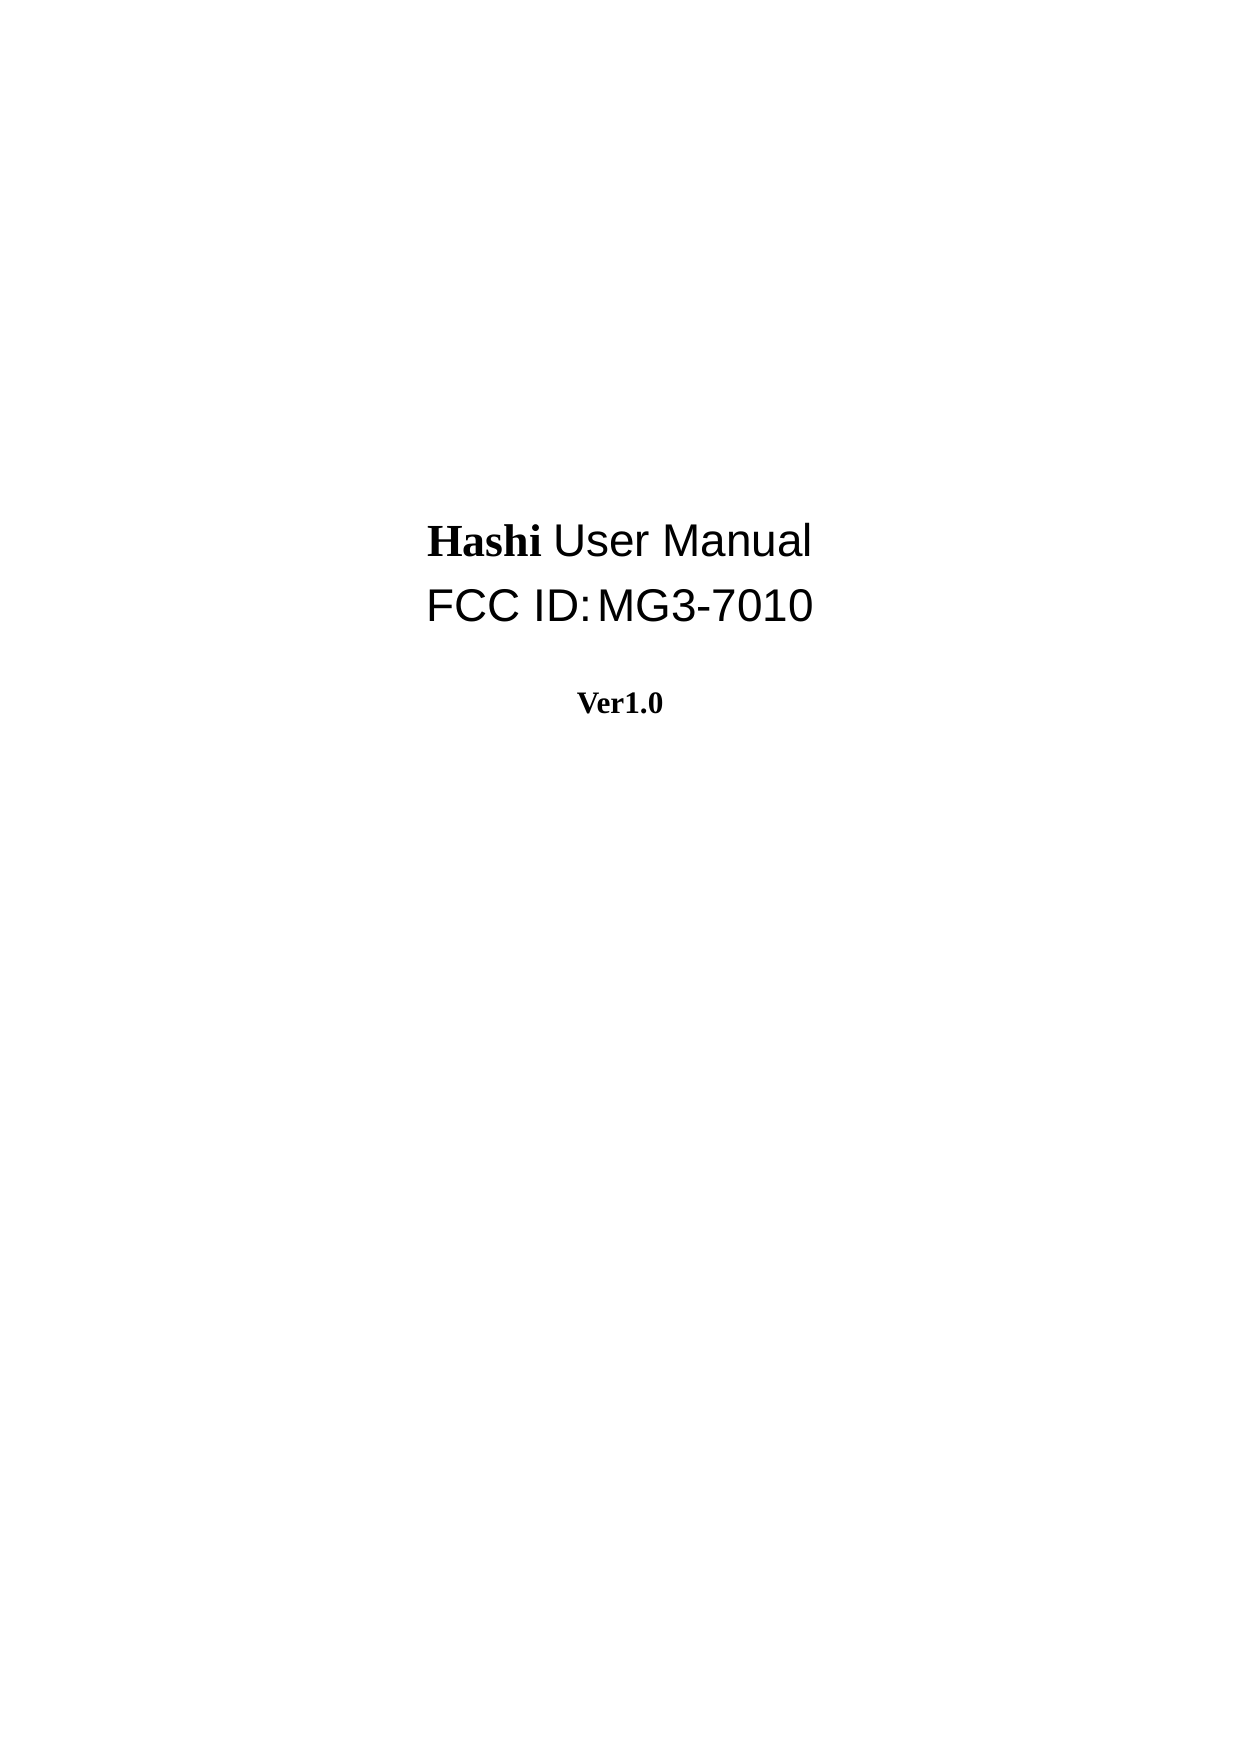        Hashi User Manual FCC ID: MG3-7010  Ver1.0                     